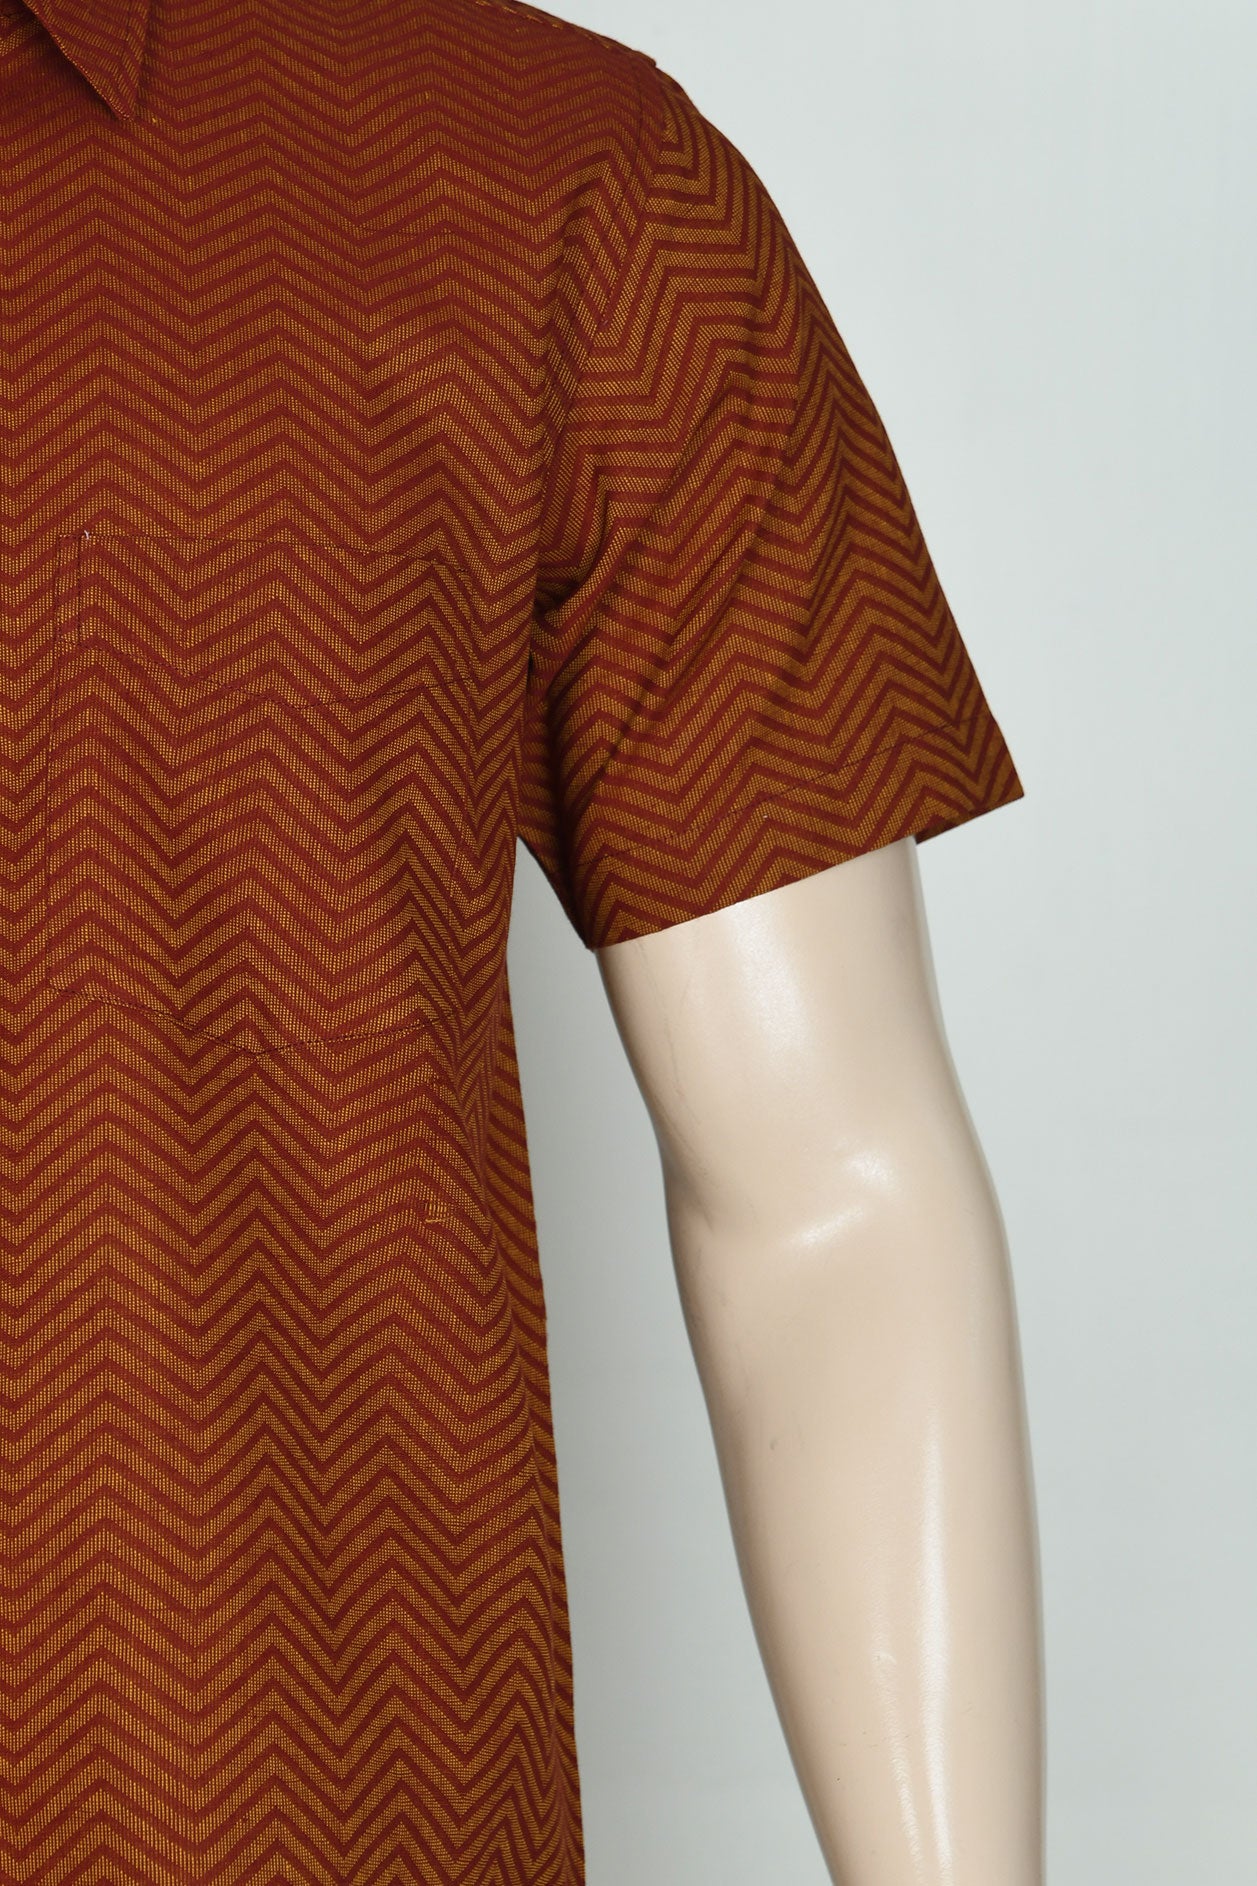 Regular Collar Chevron Design Rust Brown Cotton Shirt